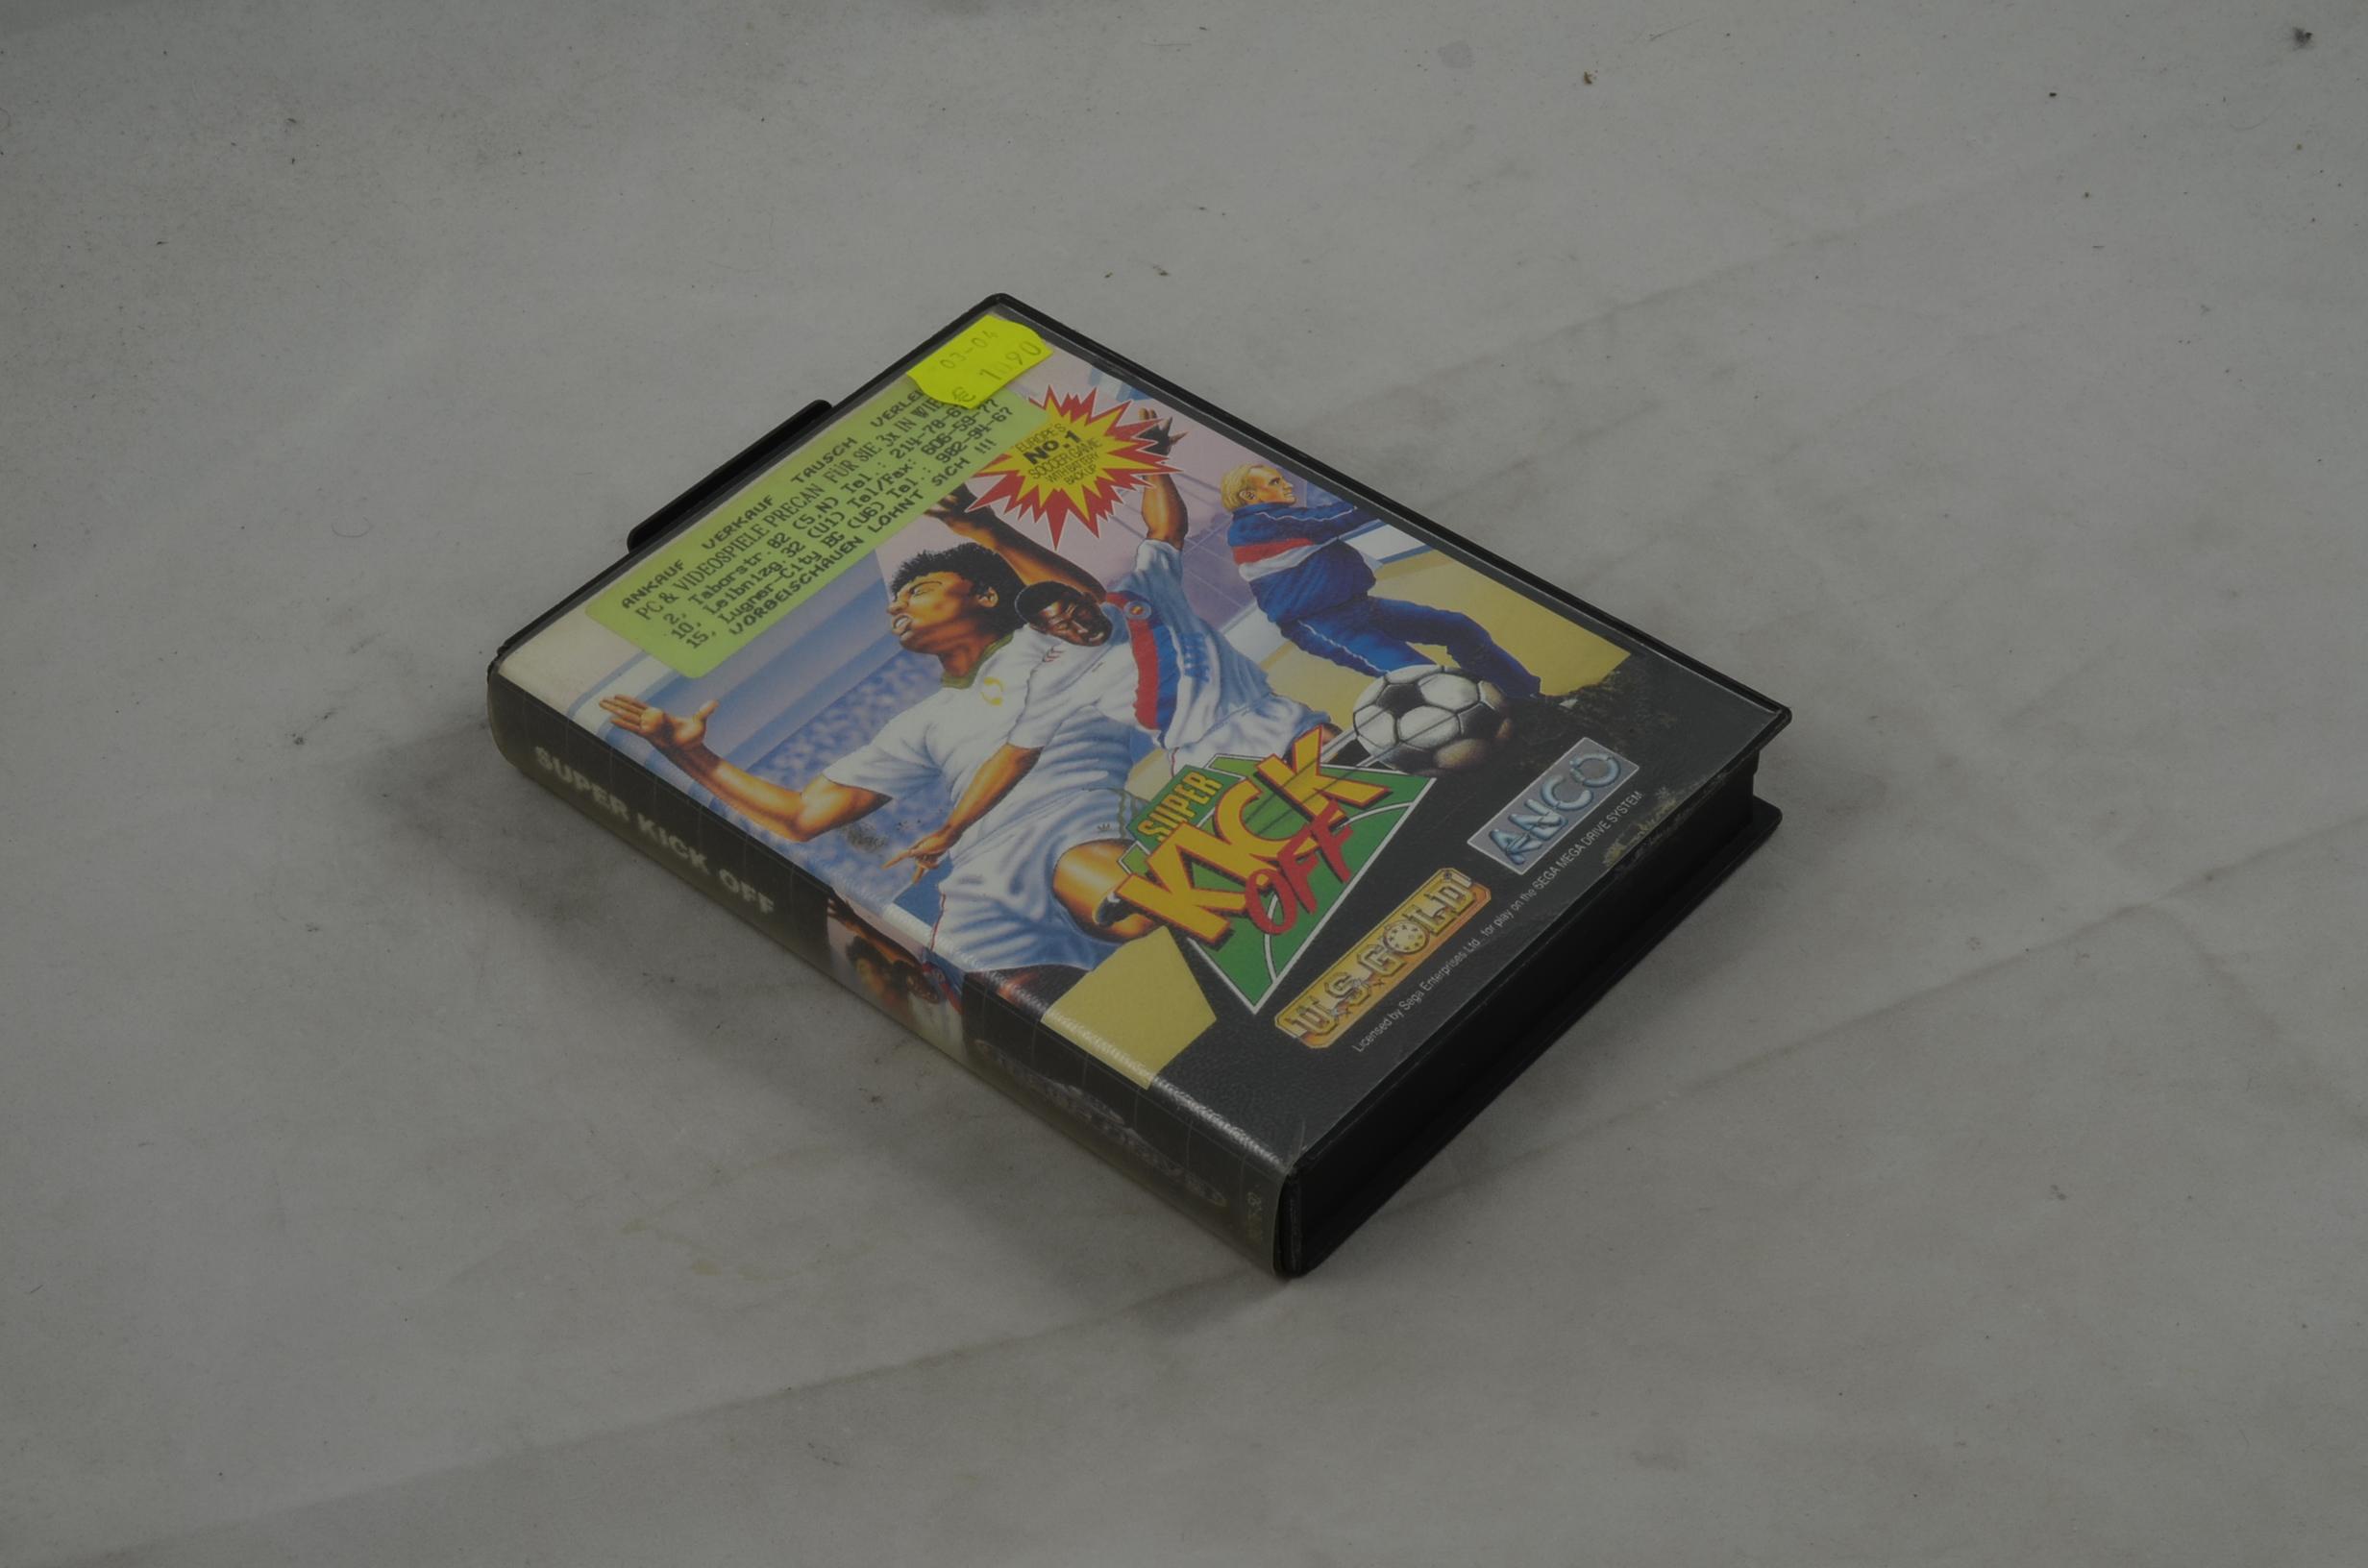 Produktbild von Super Kick Off Sega Mega Drive Spiel CIB (gut)